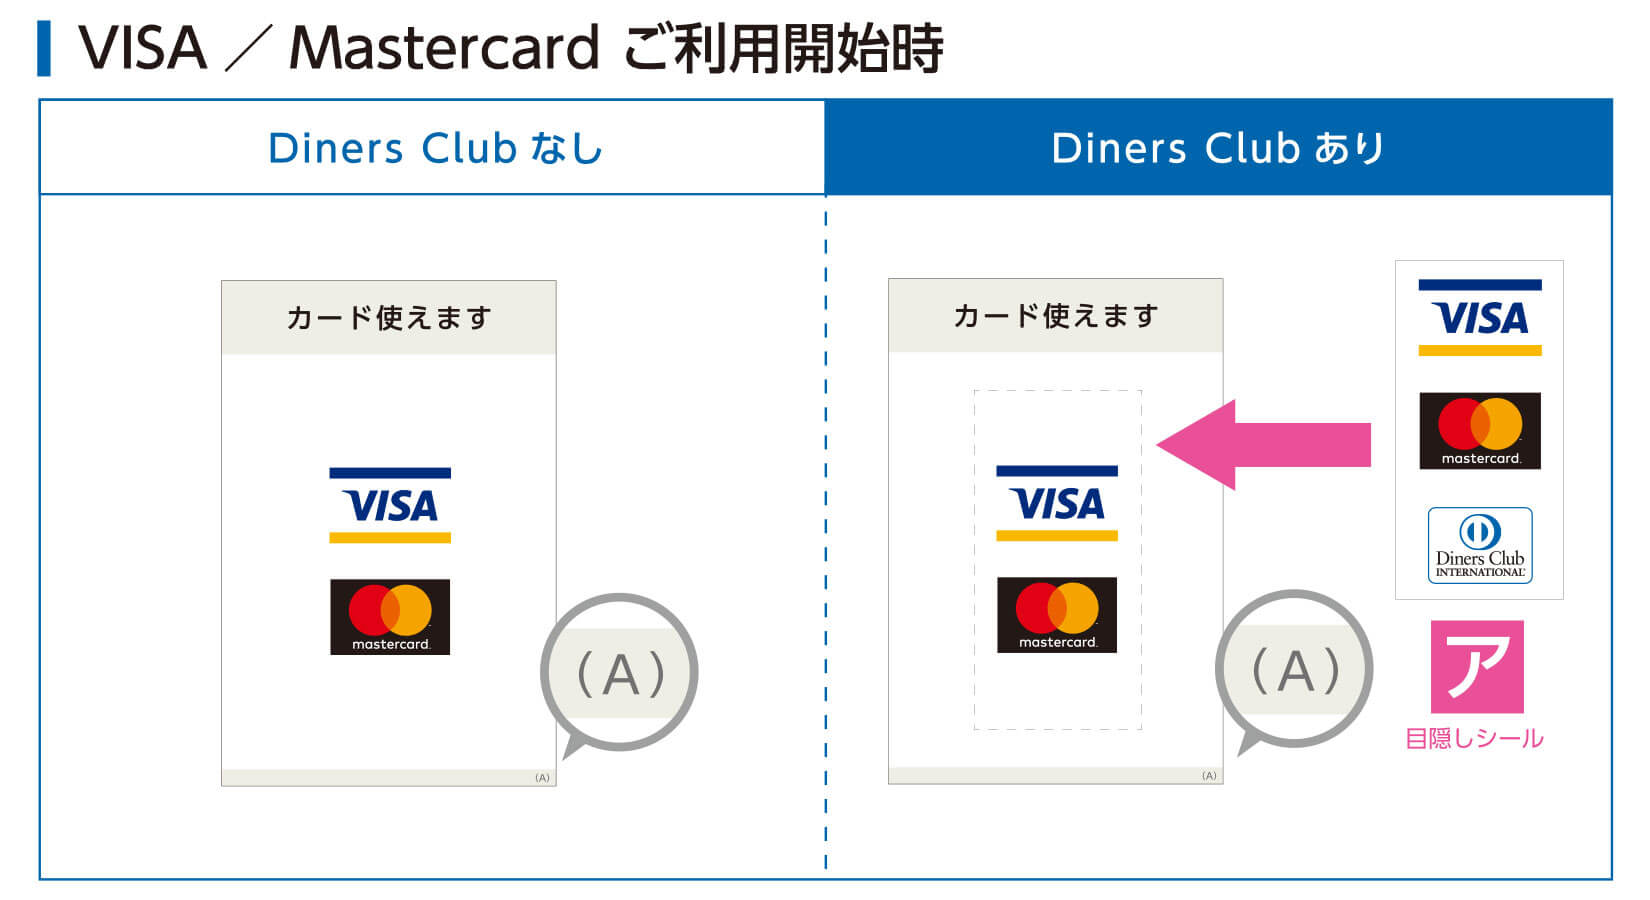 VISA/Mastercard ご利用開始時